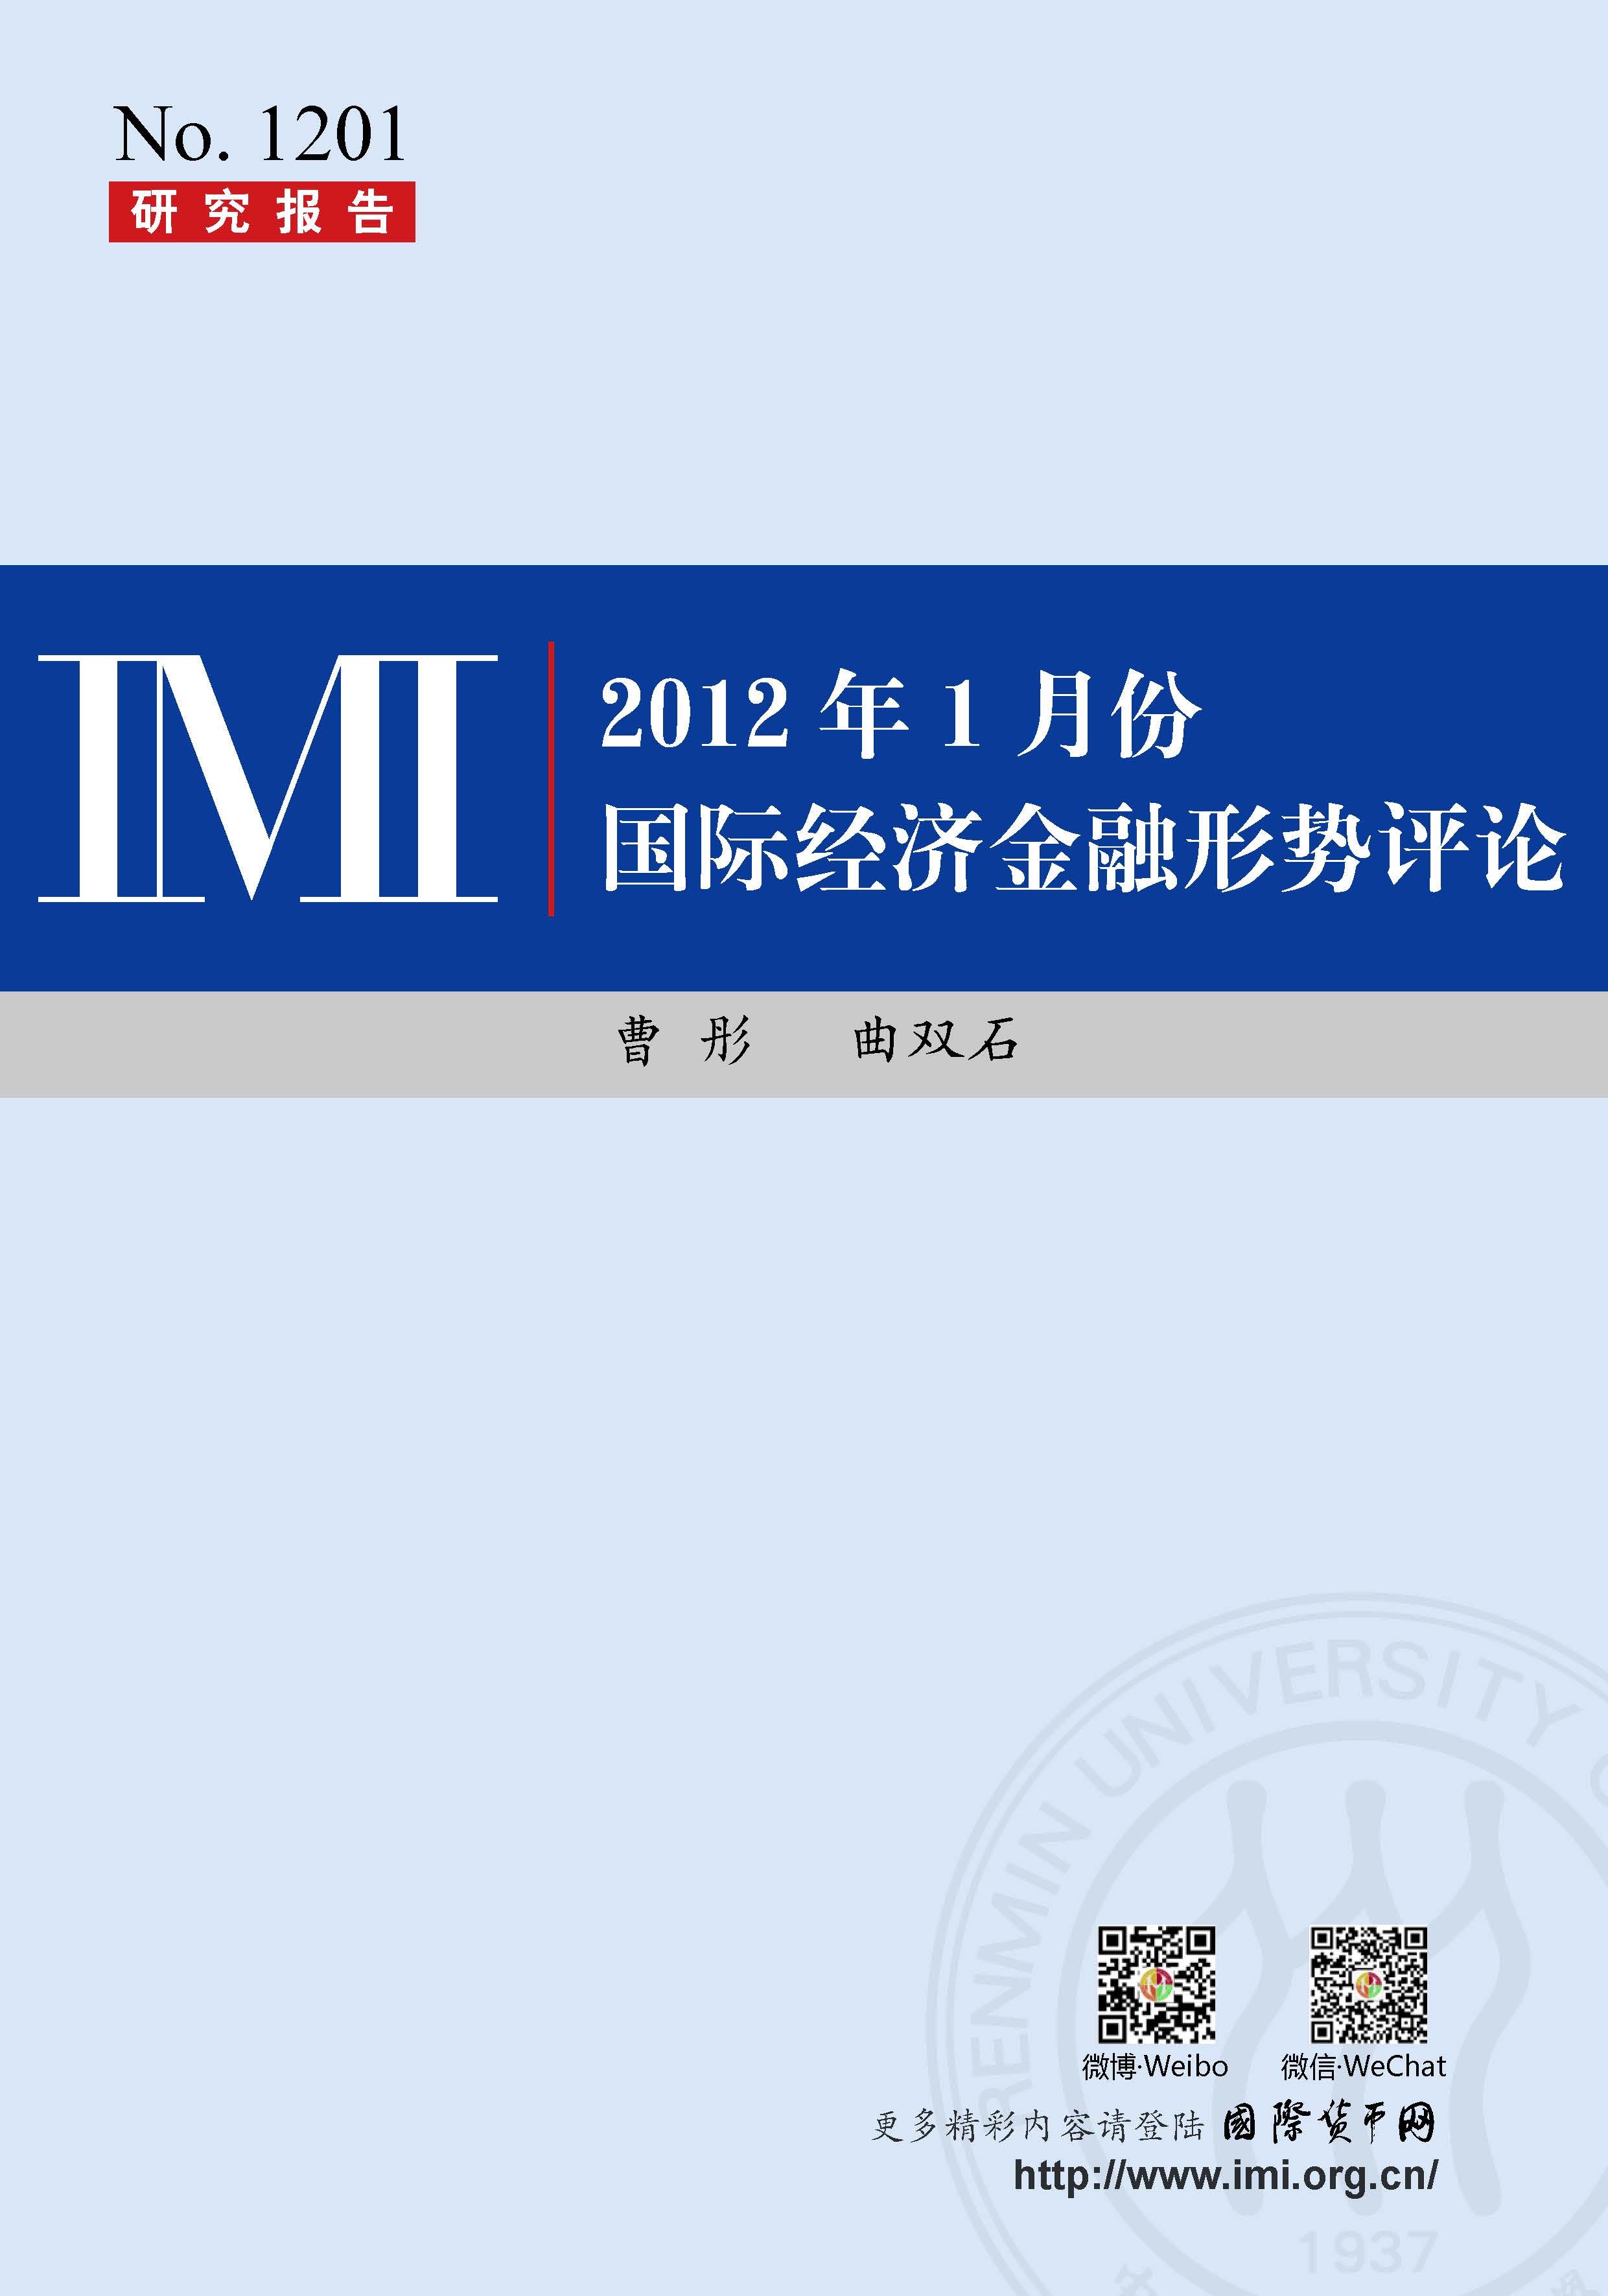 【IMI Report No.1201】2012年1月国际经济金融形势评论